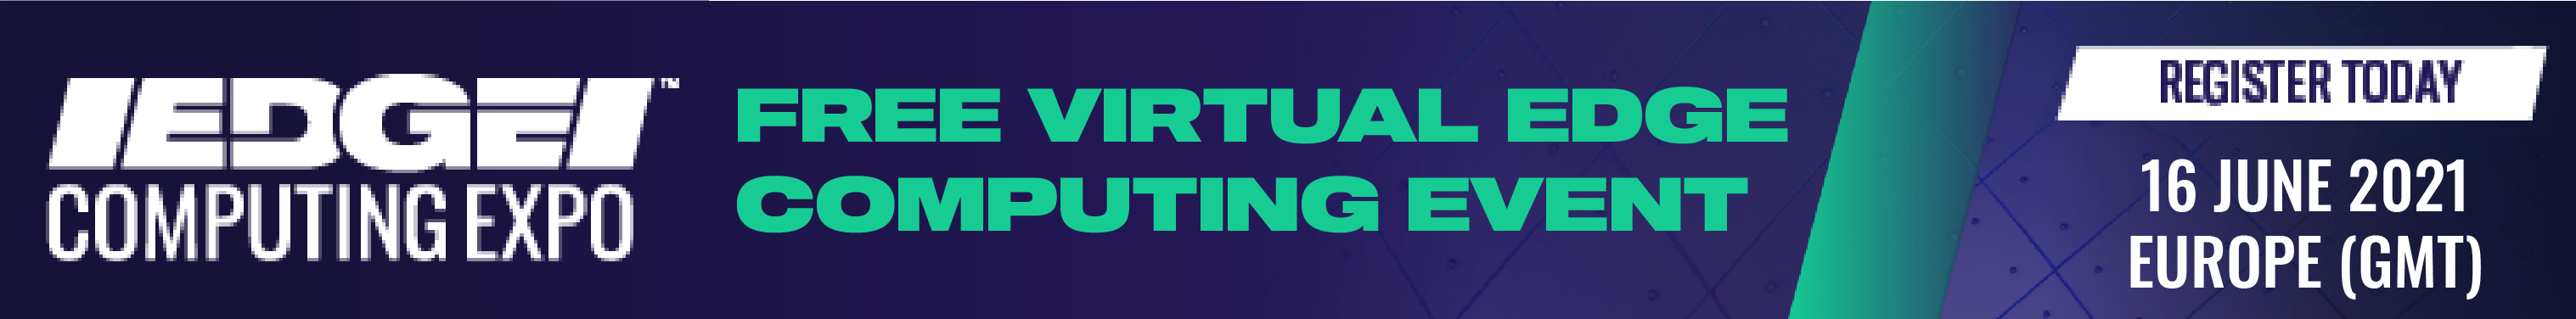 Free-virtual-edge-computing-event